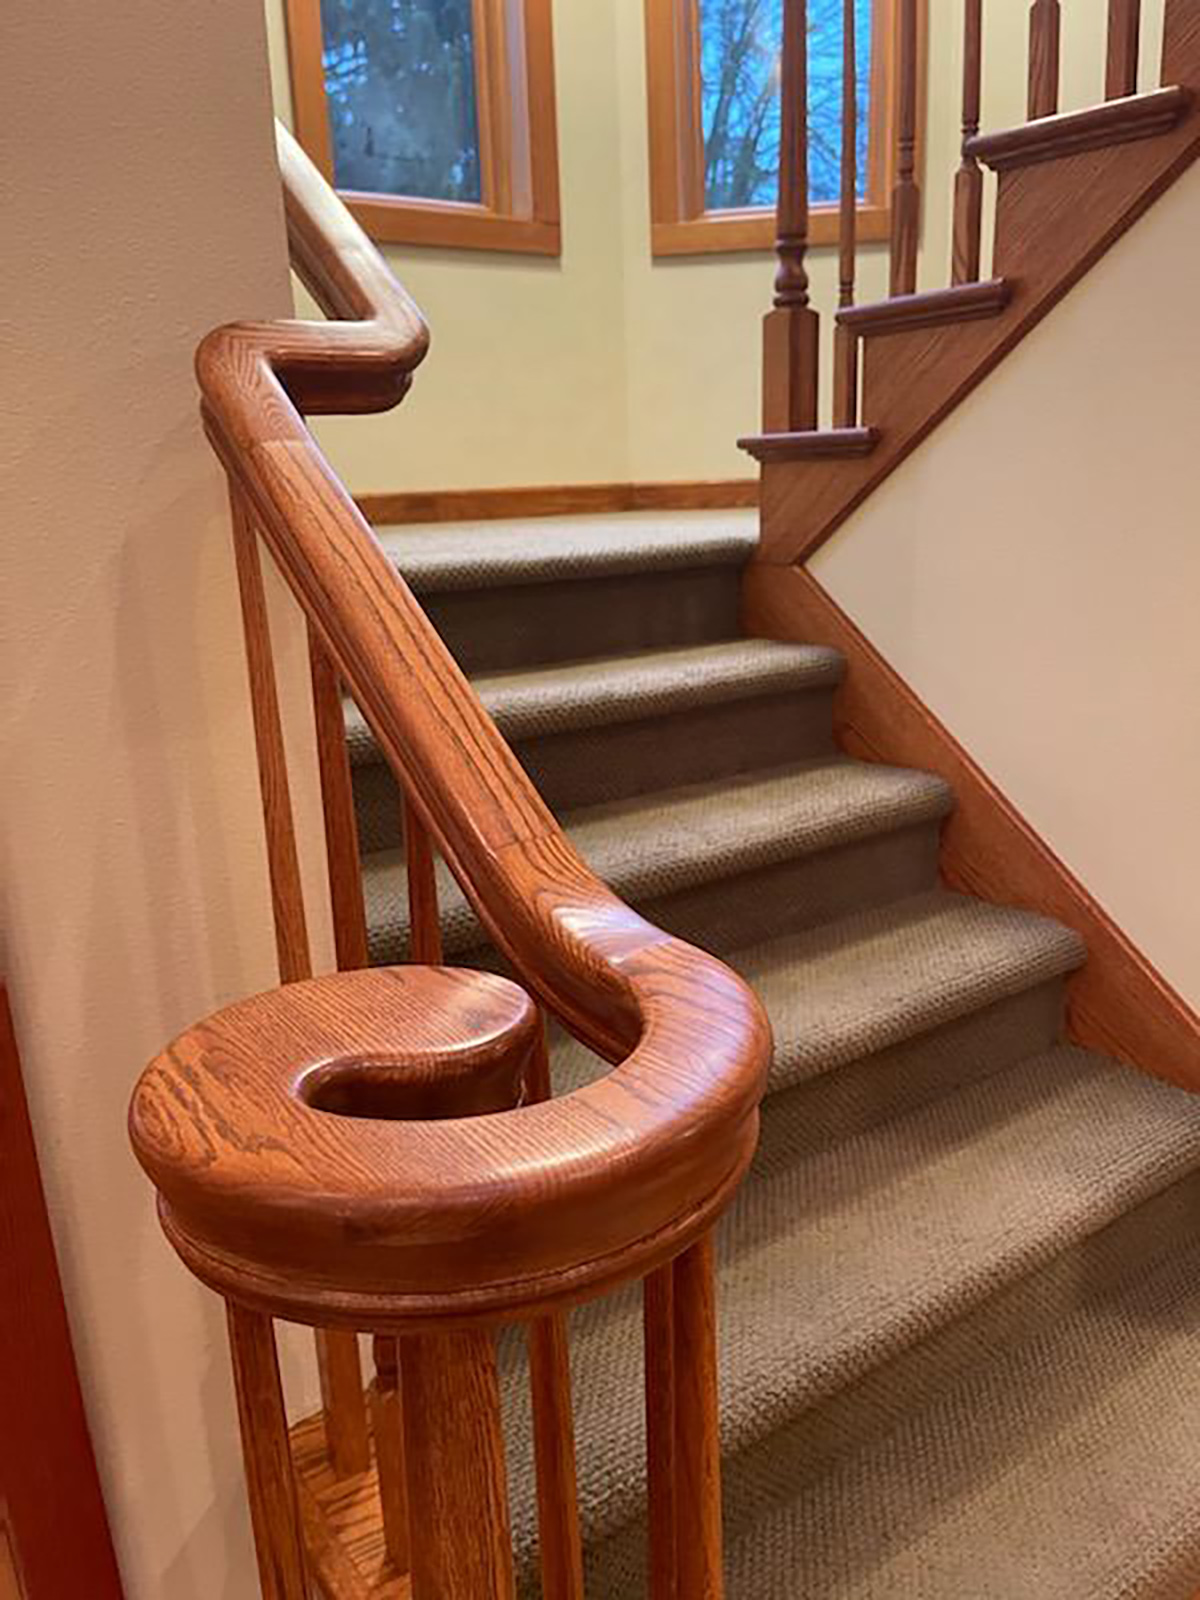 Re-staining interior wood handrailing